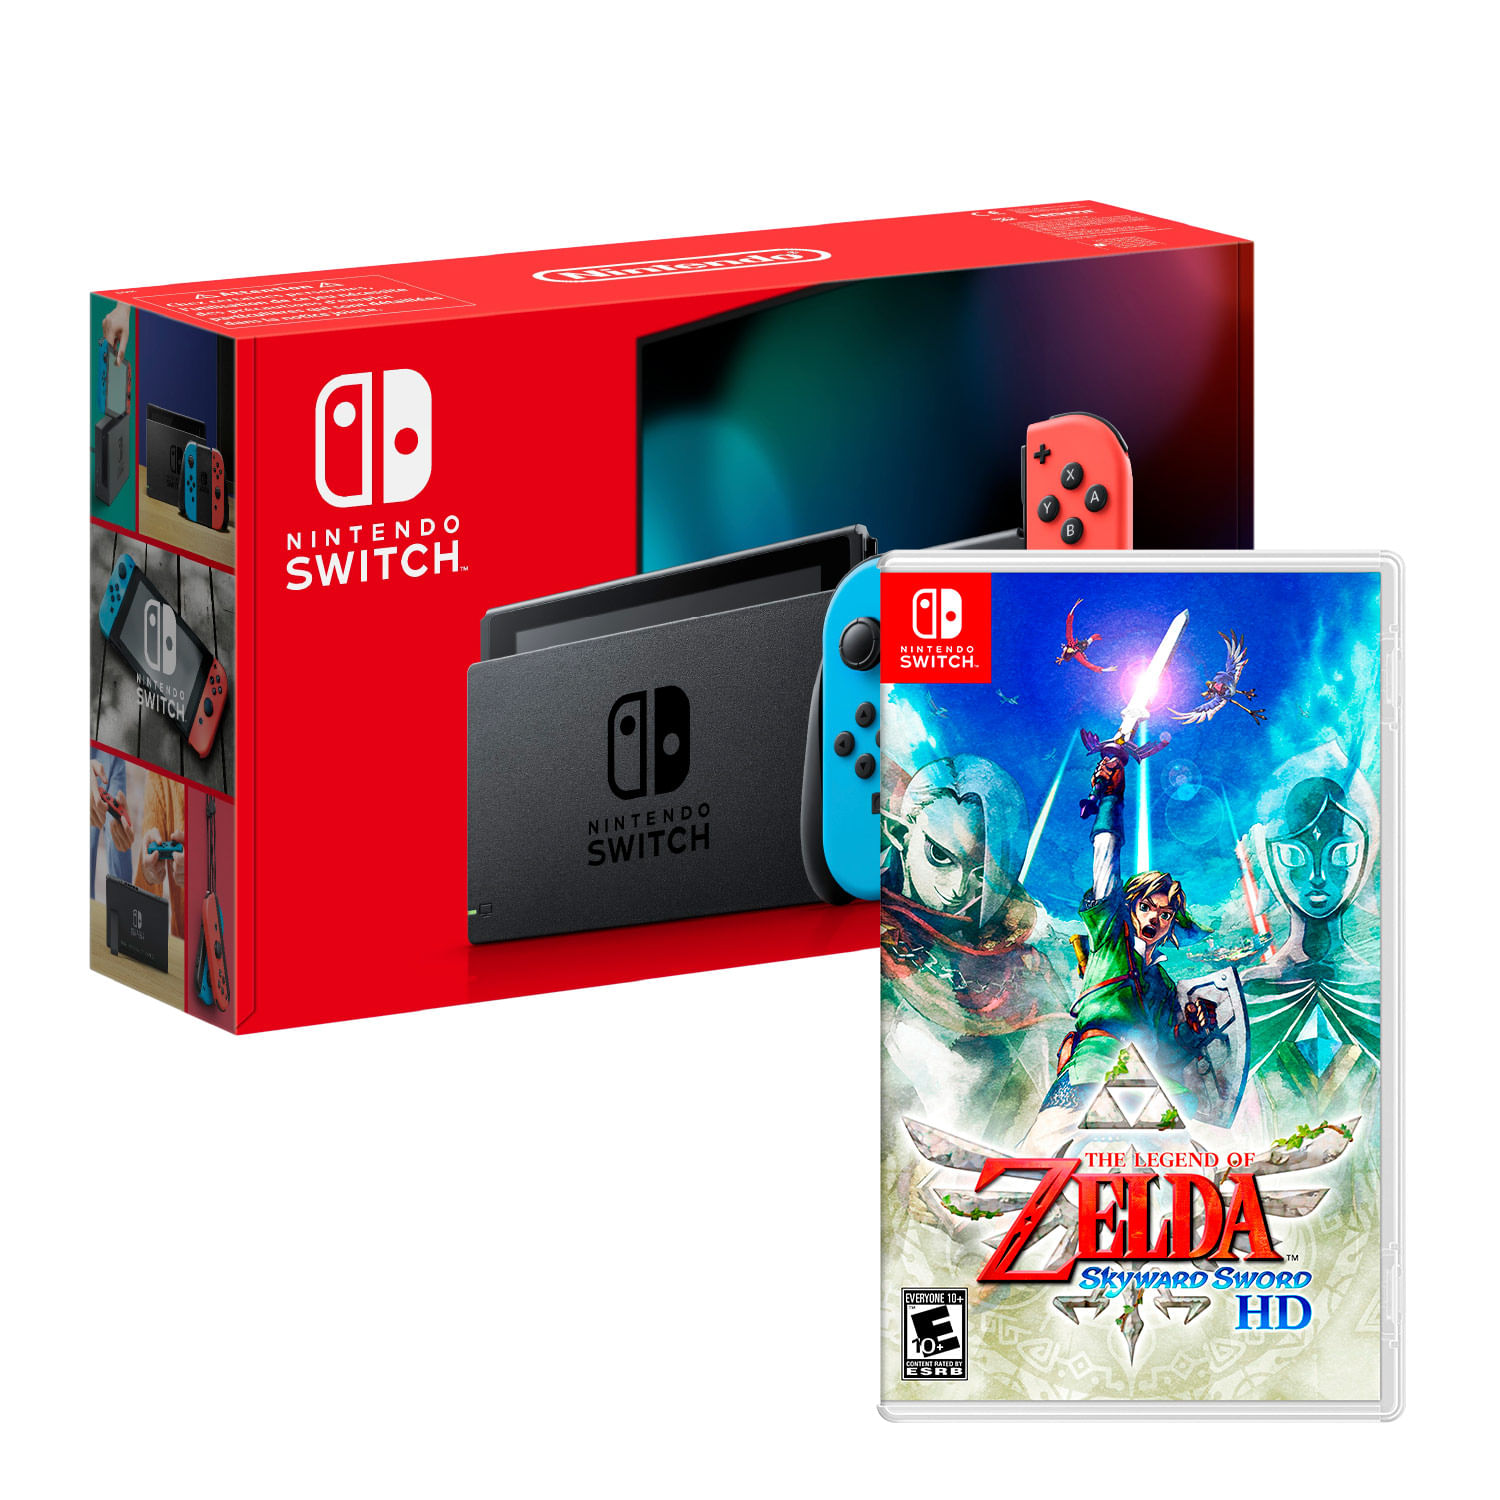 Consola Nintendo Switch Neon 2019 + Zelda Skyward Sword HD